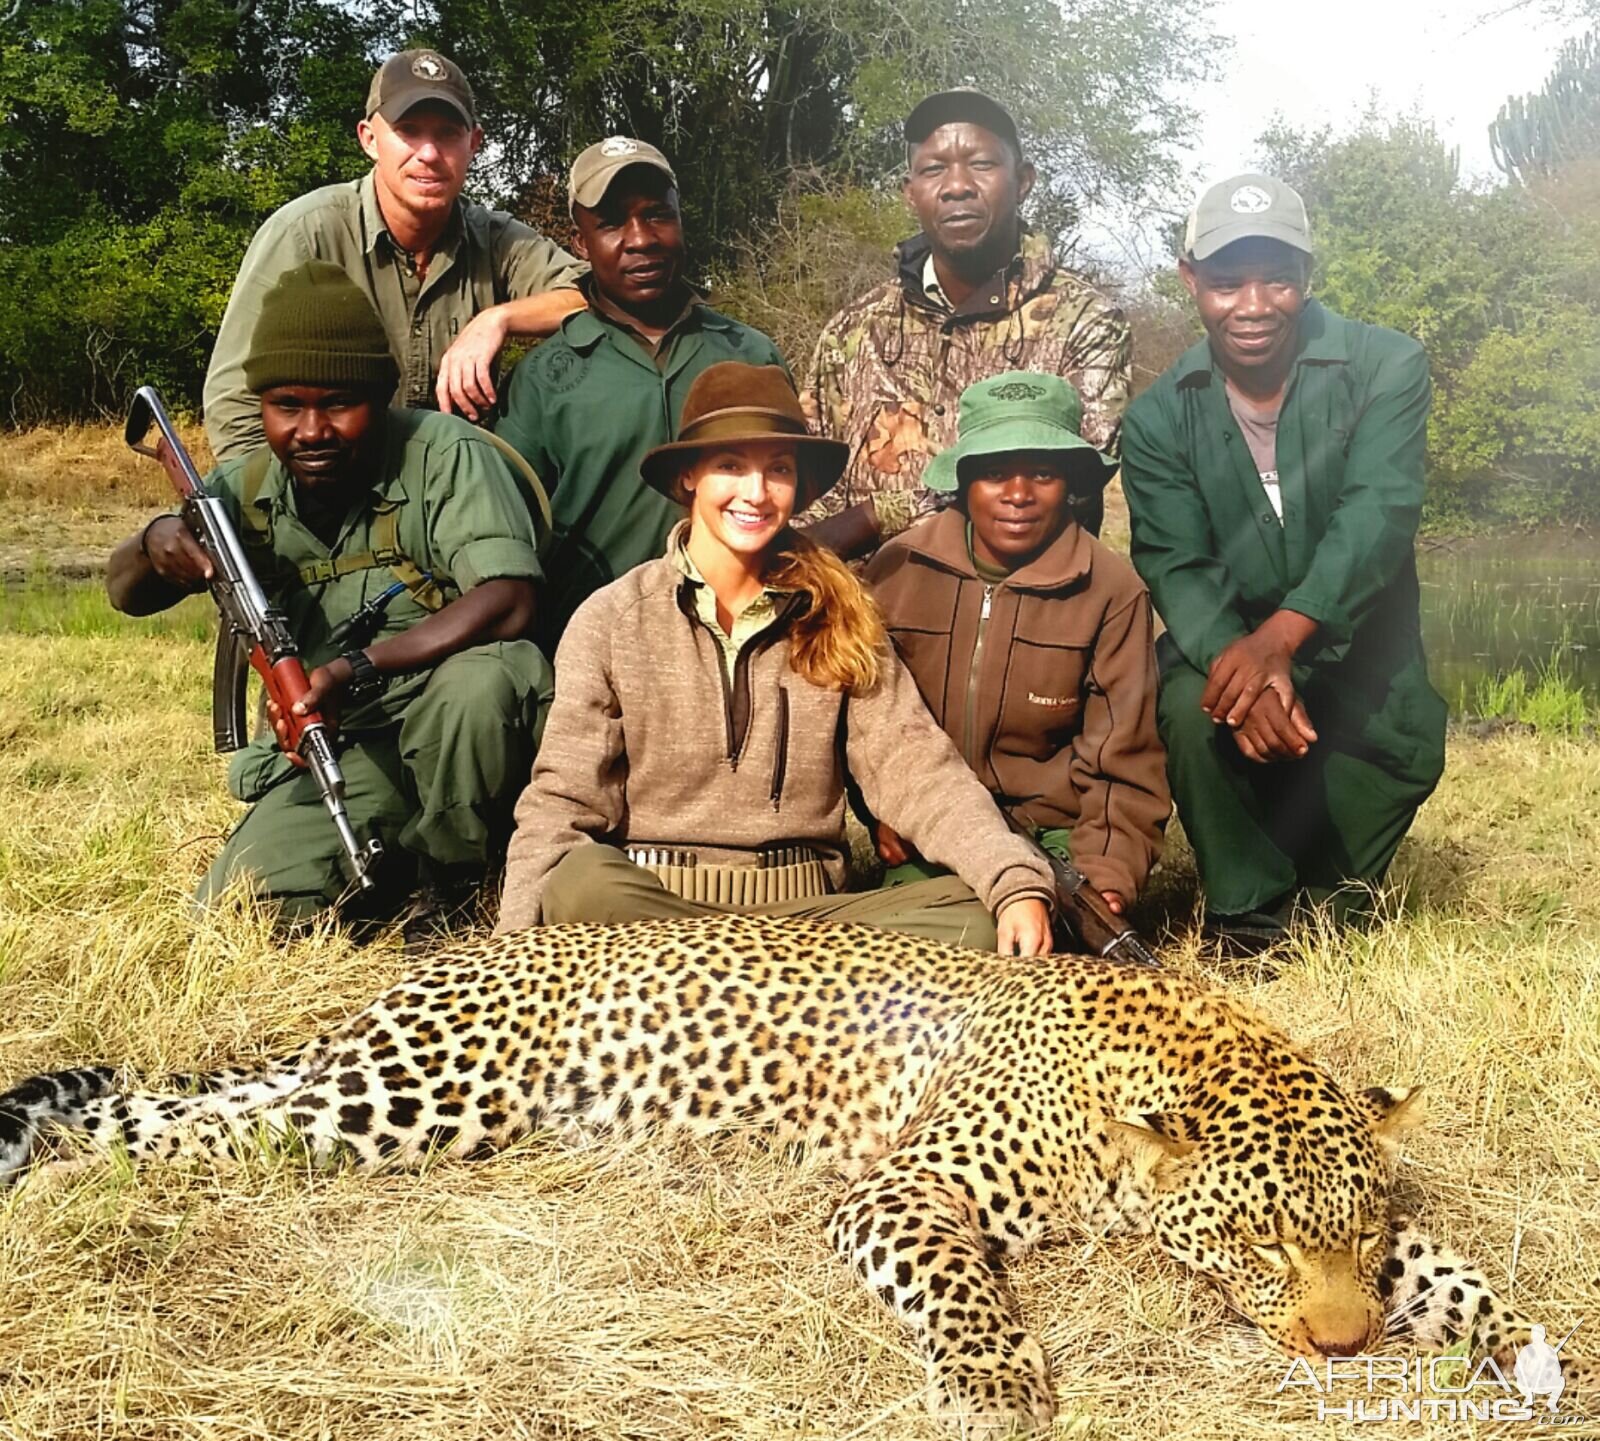 brave africa hunting safaris